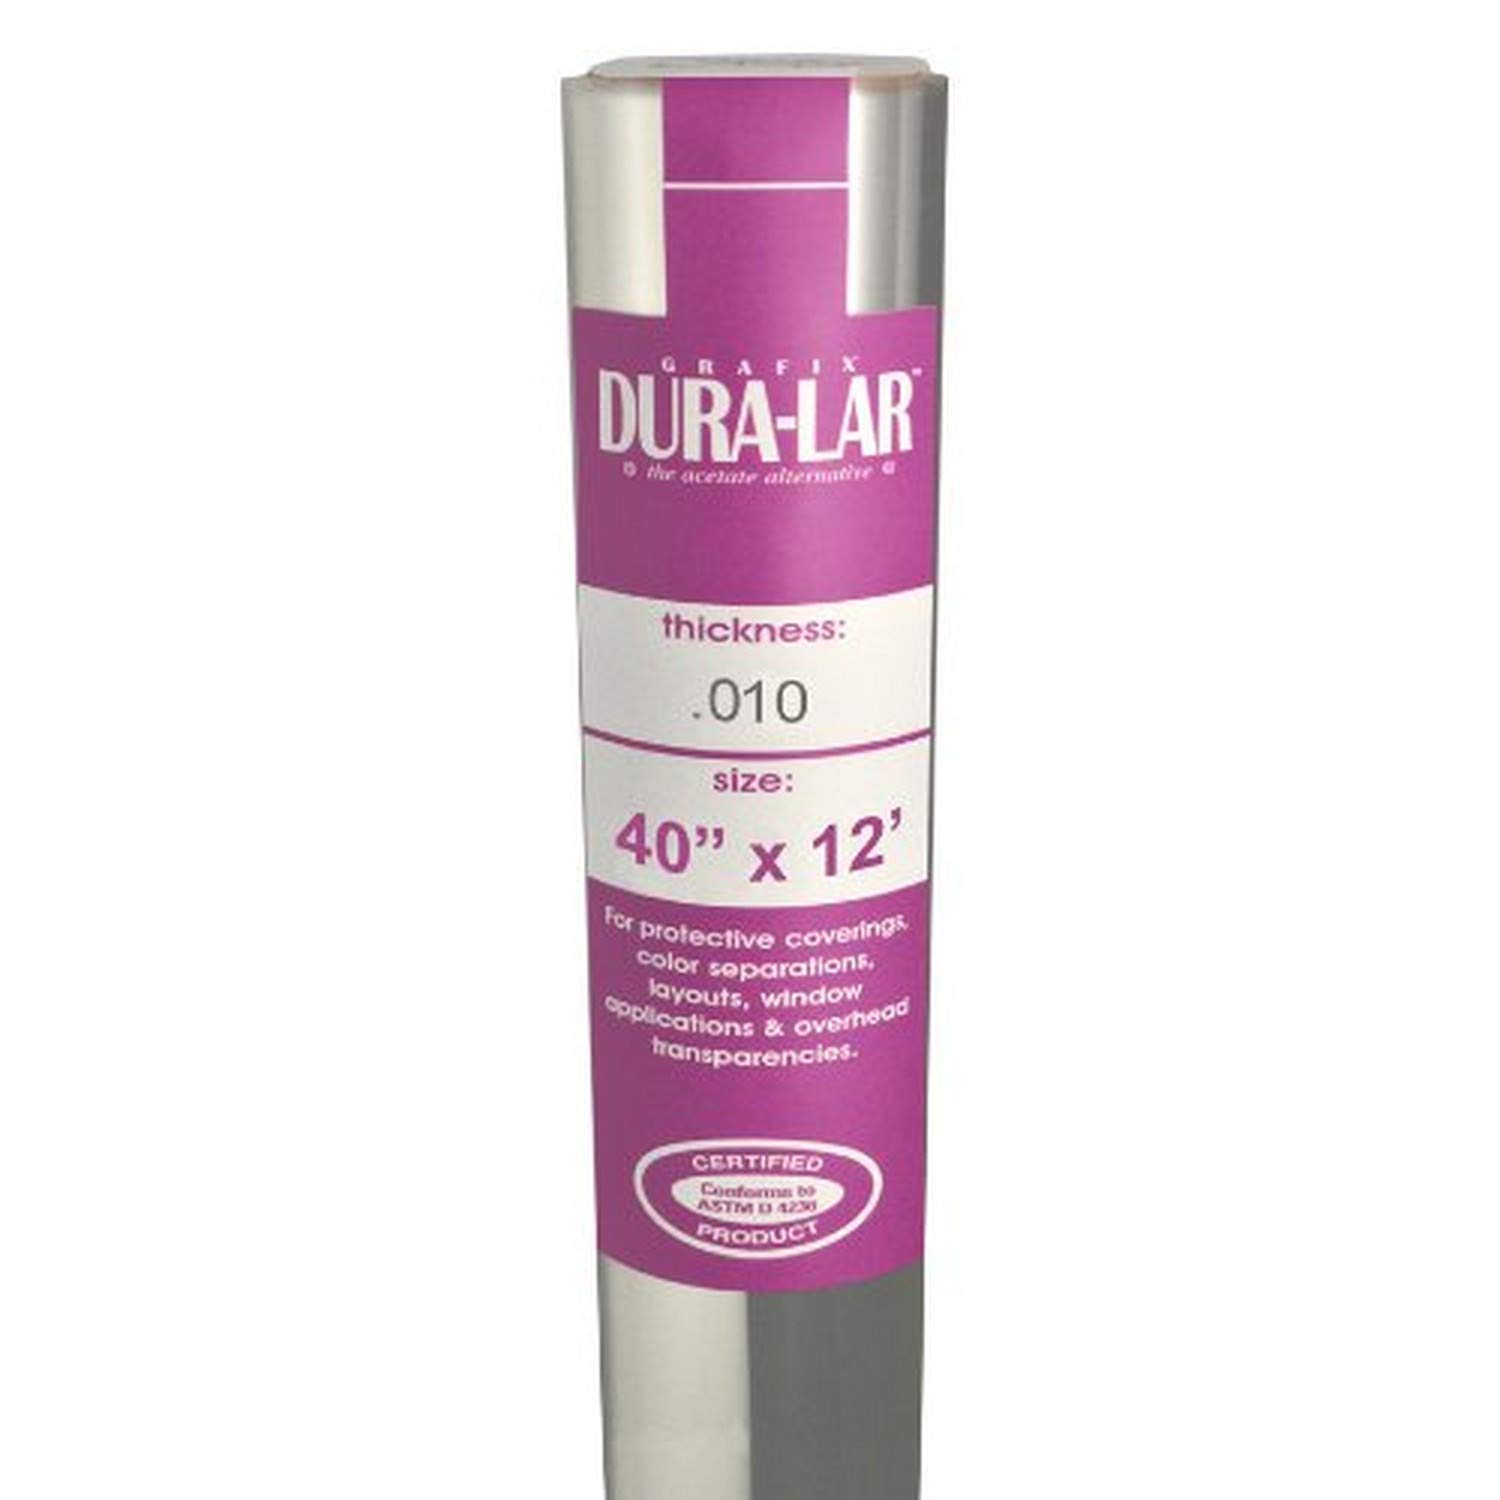 grafix Dura-Lar clear 40A x 12A Roll - Ultra 010A Film, Acetate Alternative, glossy Surface for coverings, Stencils, color Separ